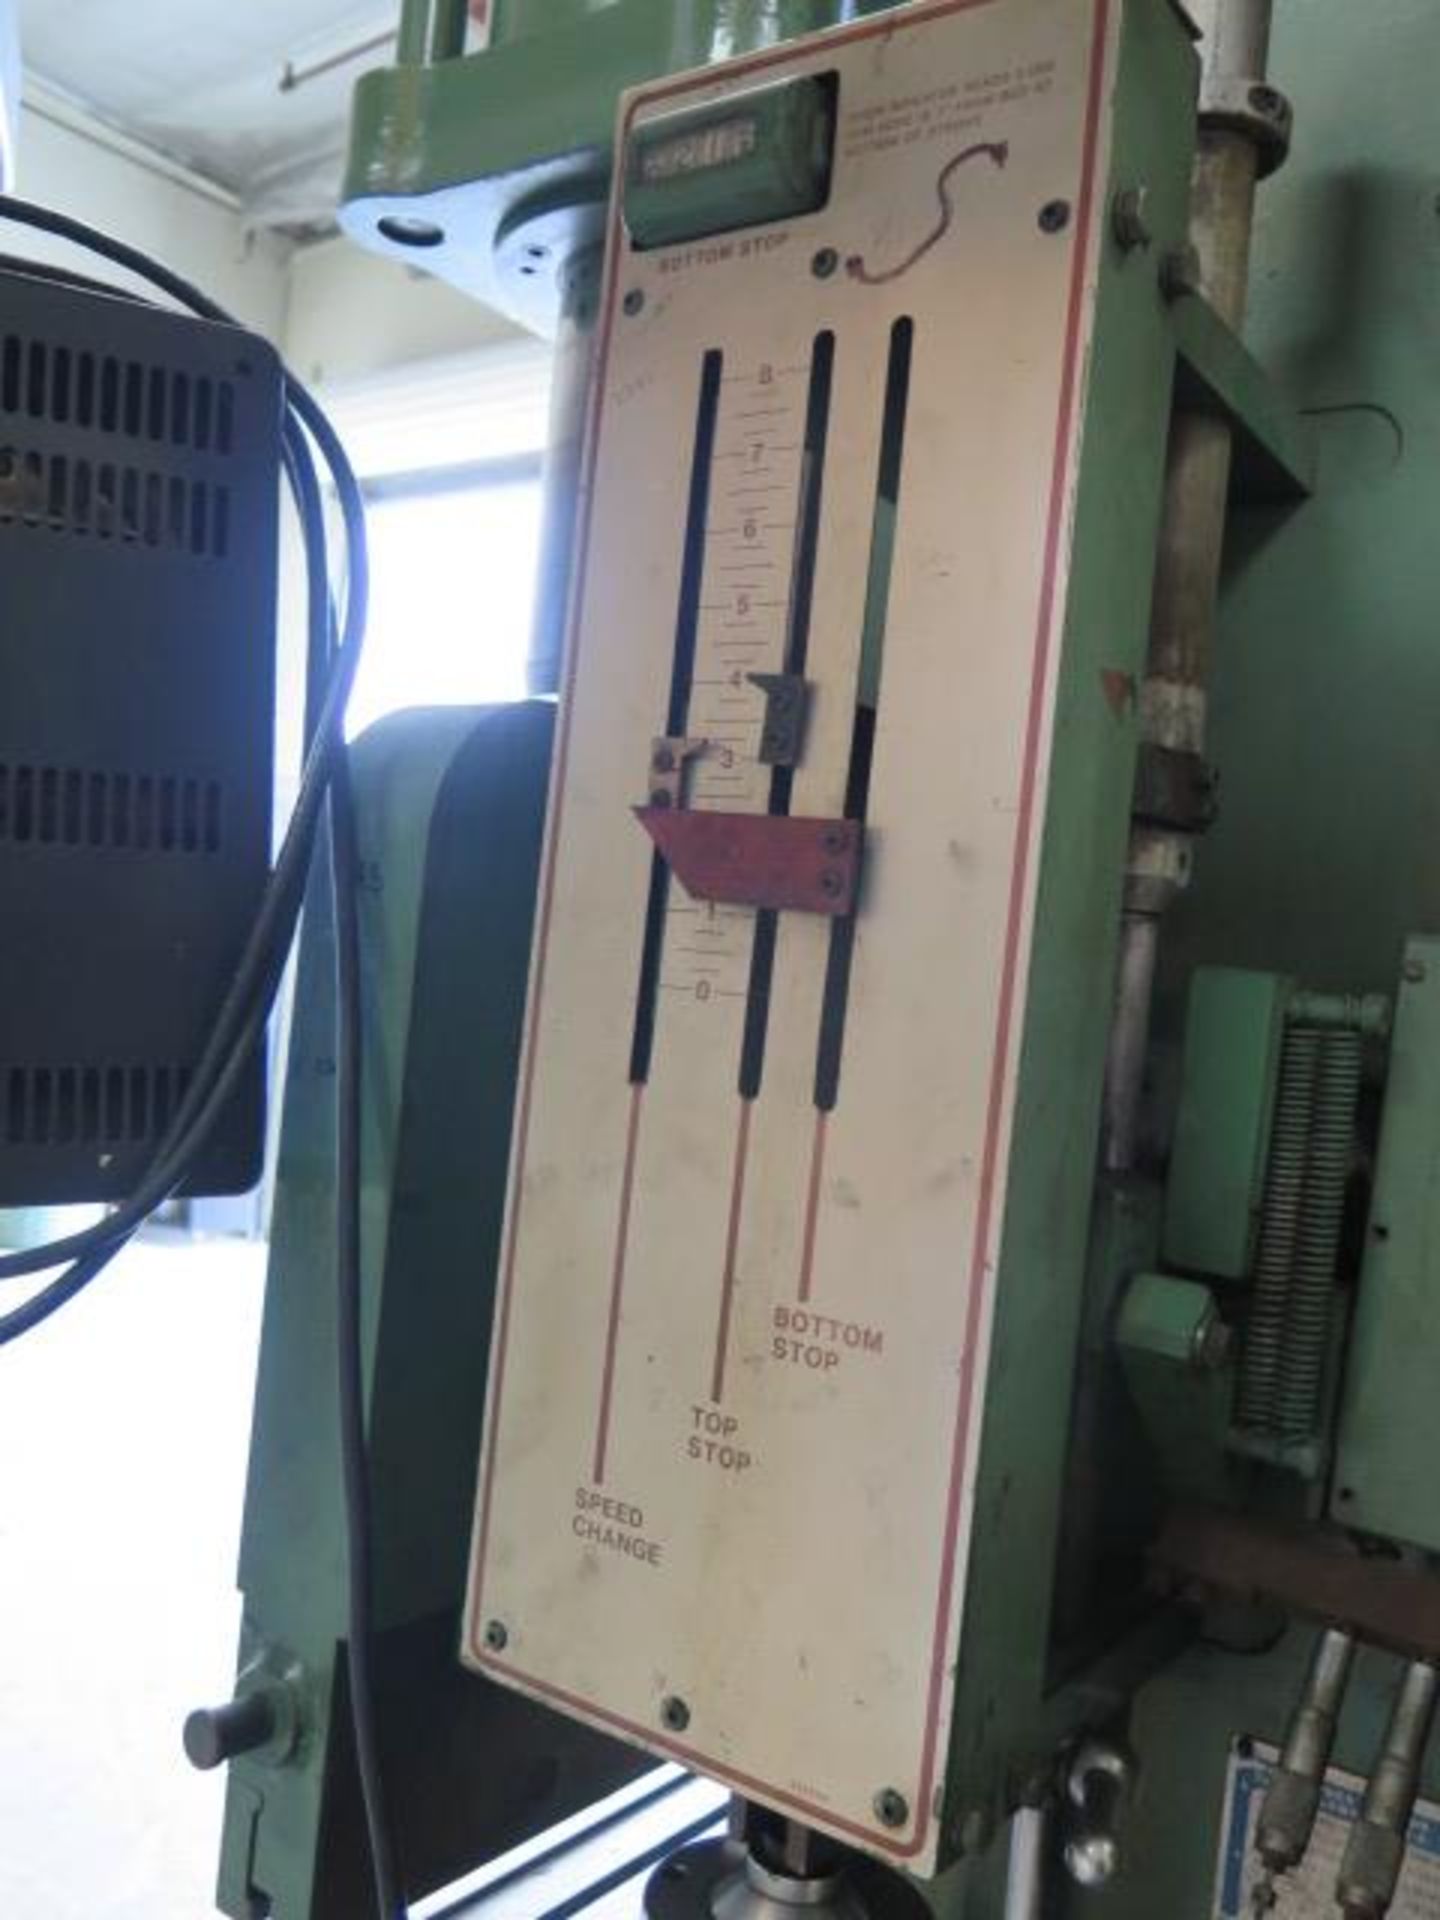 Cincinnati 135CBx8FT 135 Ton x 10’ CNC Hyd Press Brake s/n 43260 w/Dynabend III Controls, SOLD AS IS - Image 13 of 18